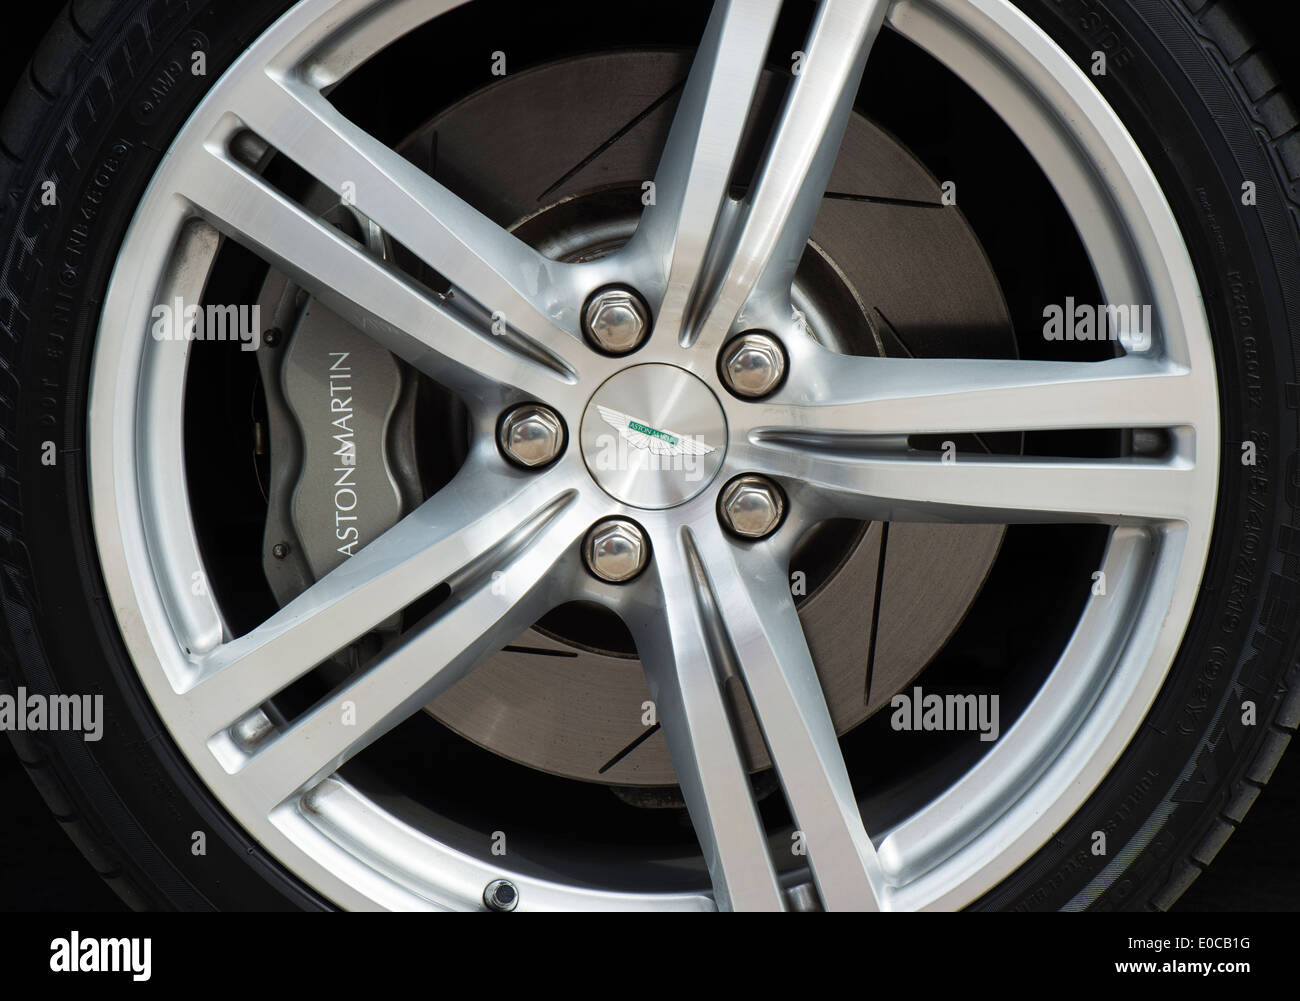 Aston Martin DB9 Wheel and Brake Caliper Stock Photo - Alamy